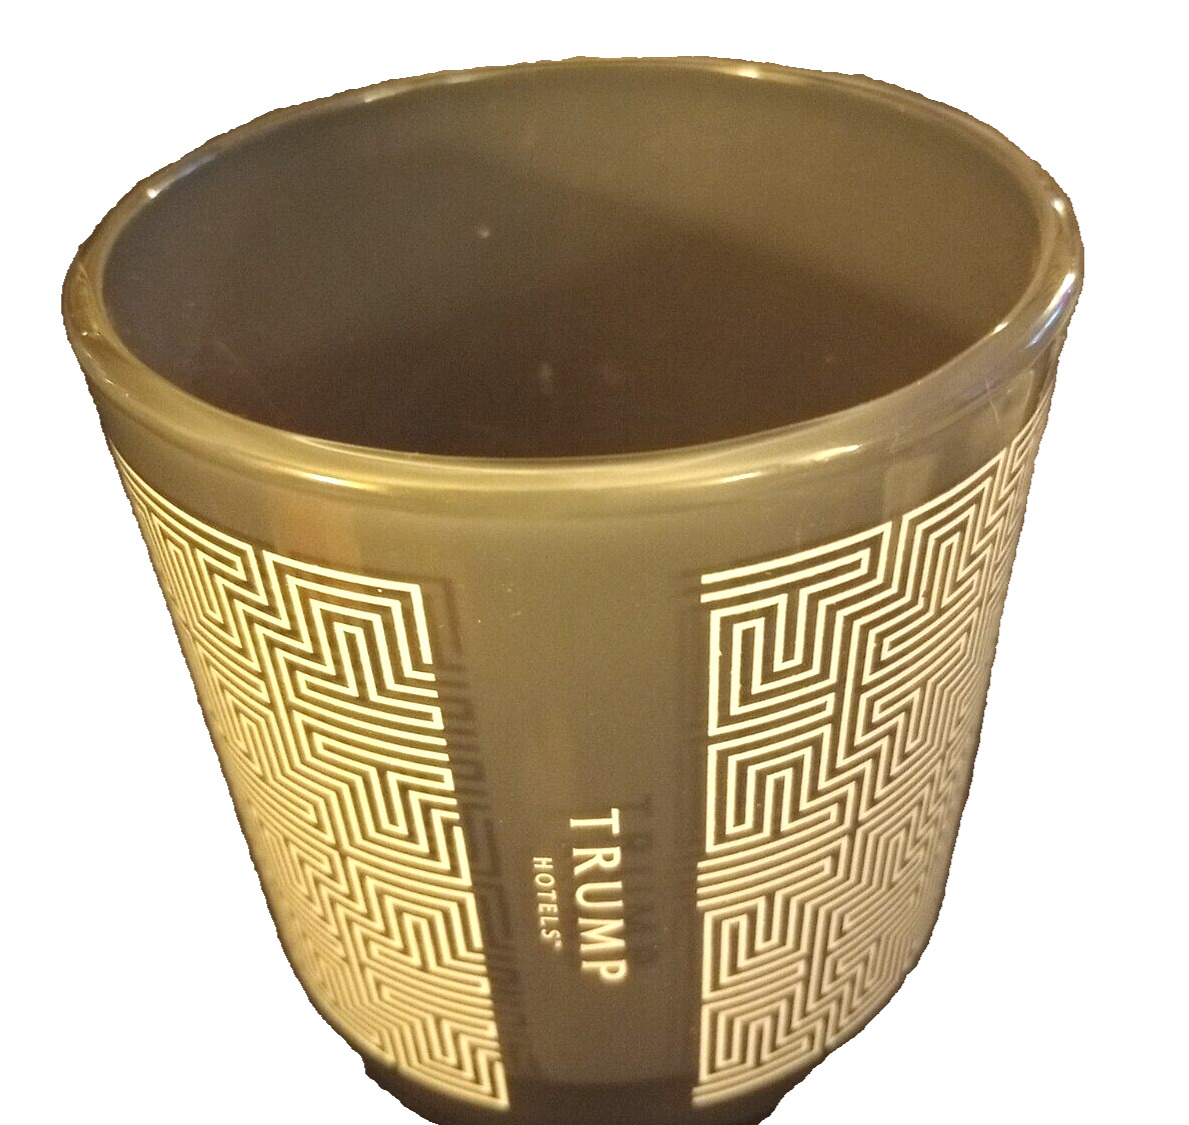 Trump Hotels Ceramic Cup/Jar/Candle Holder NEW 3 in Diameter